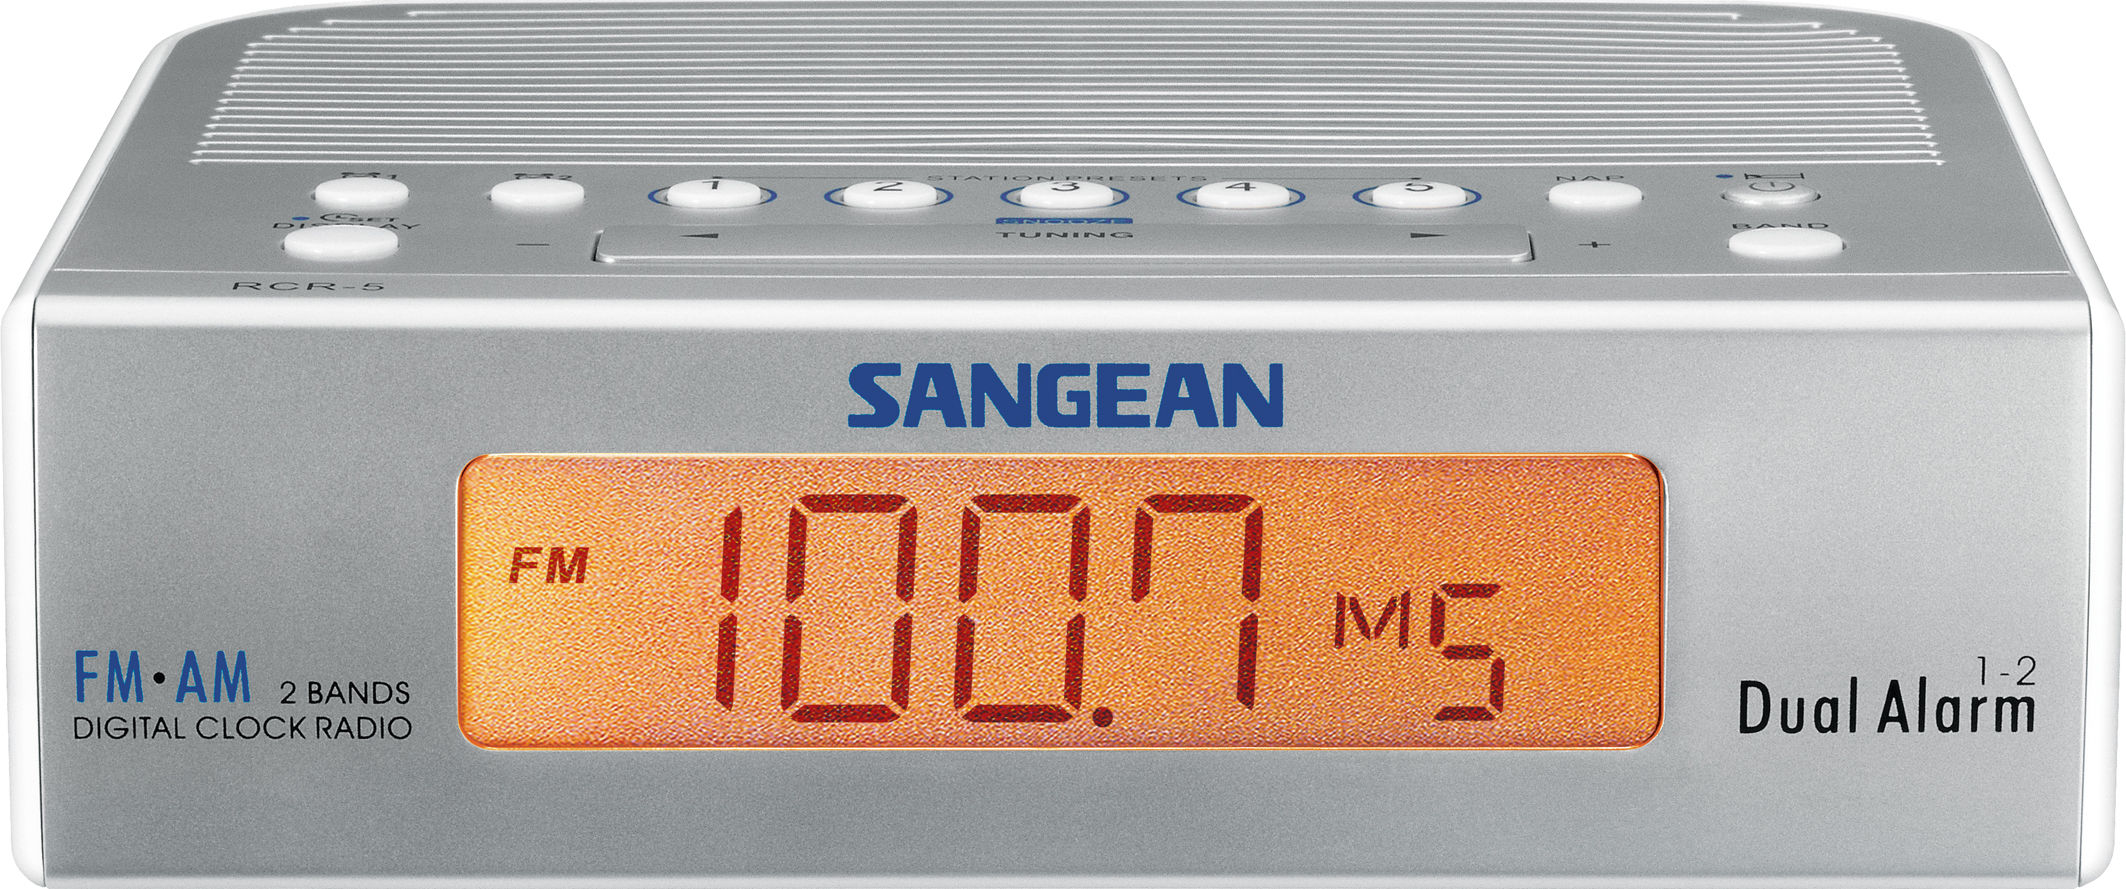 RCR-5, digital clock radio, silver